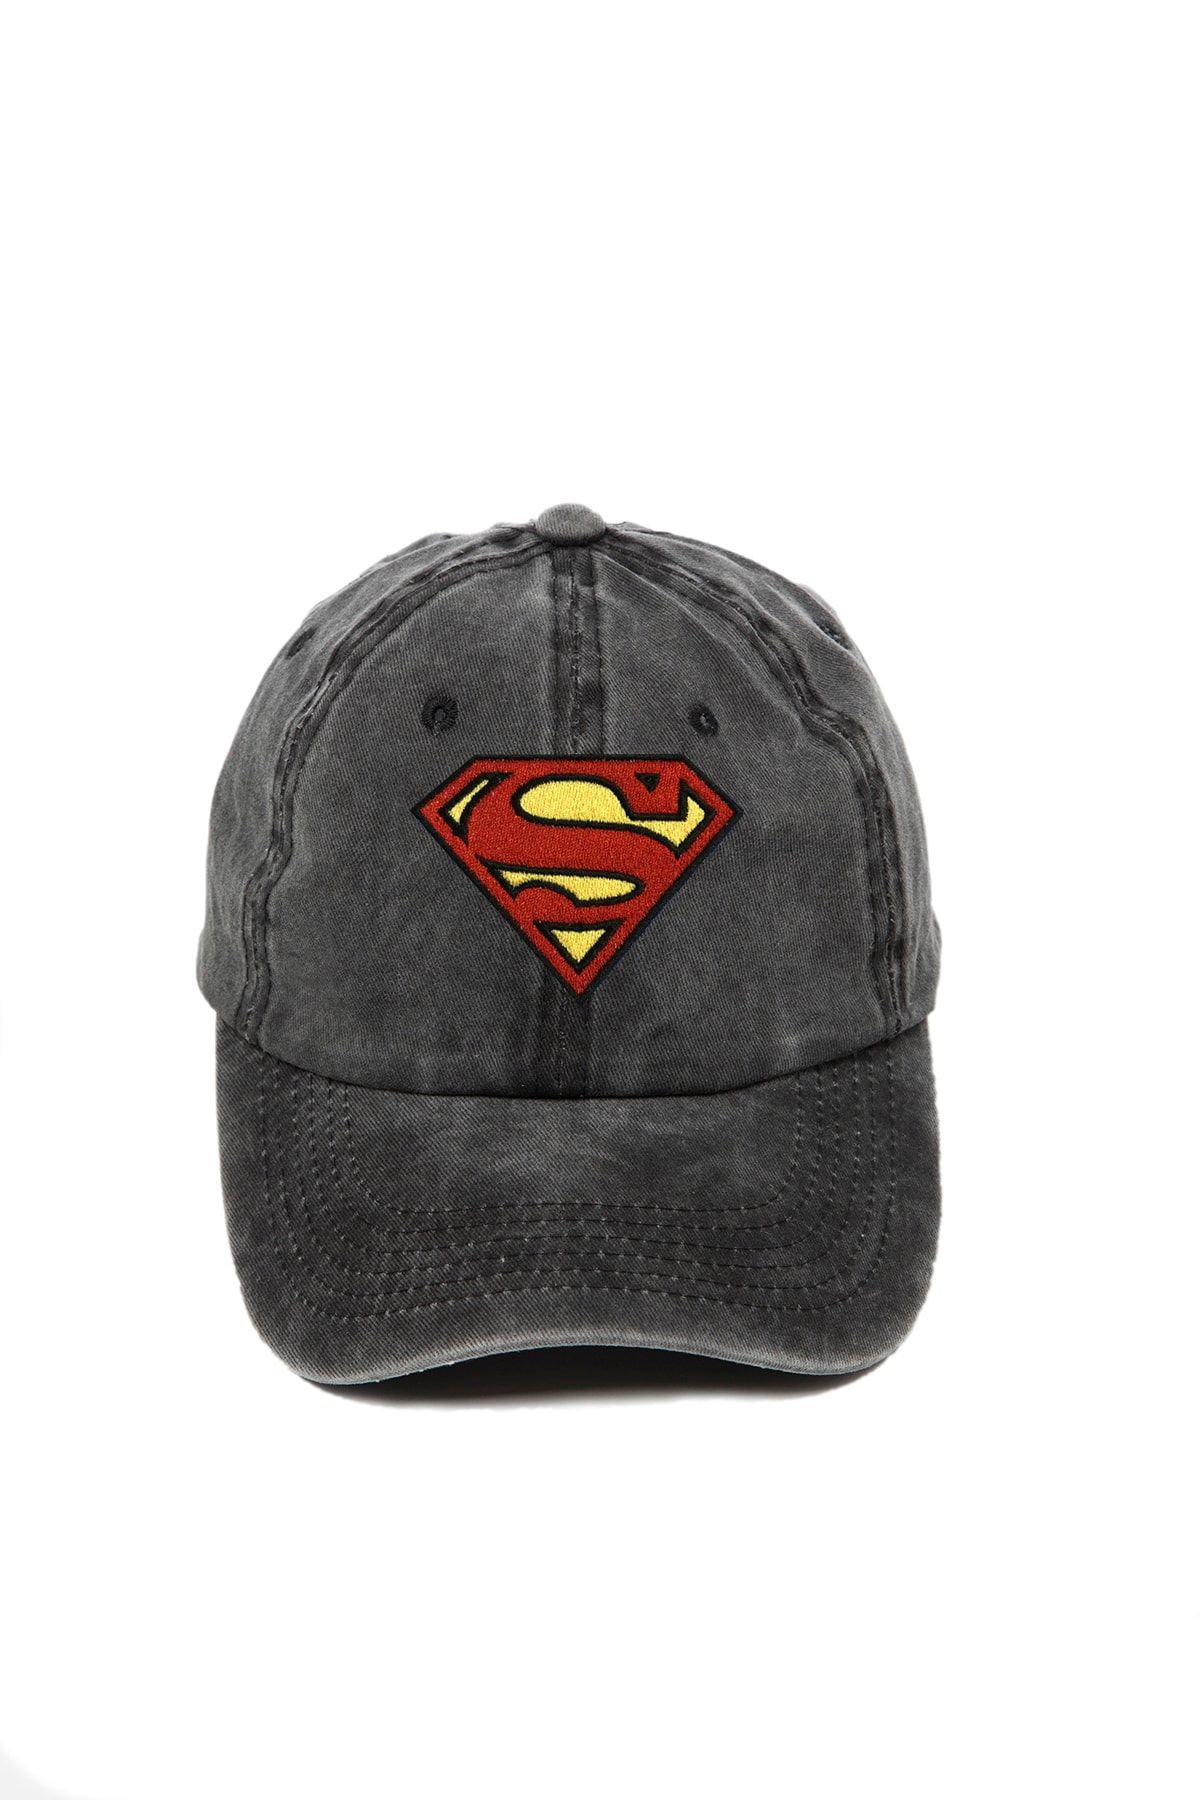 CİSE Aksesuar Superman Şapka